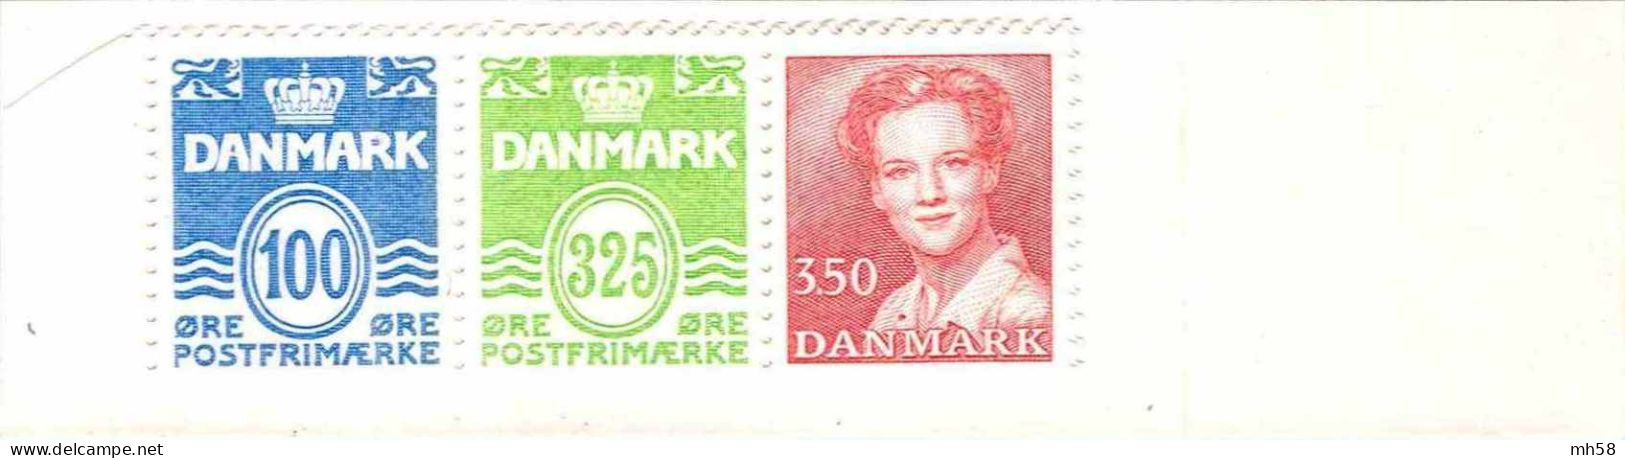 DANEMARK 1990 - Carnet / Booklet / MH Indice C10 - 10 Kr Chiffres / Reine Margarethe - YT C 966 I / MI MH 41 - Cuadernillos